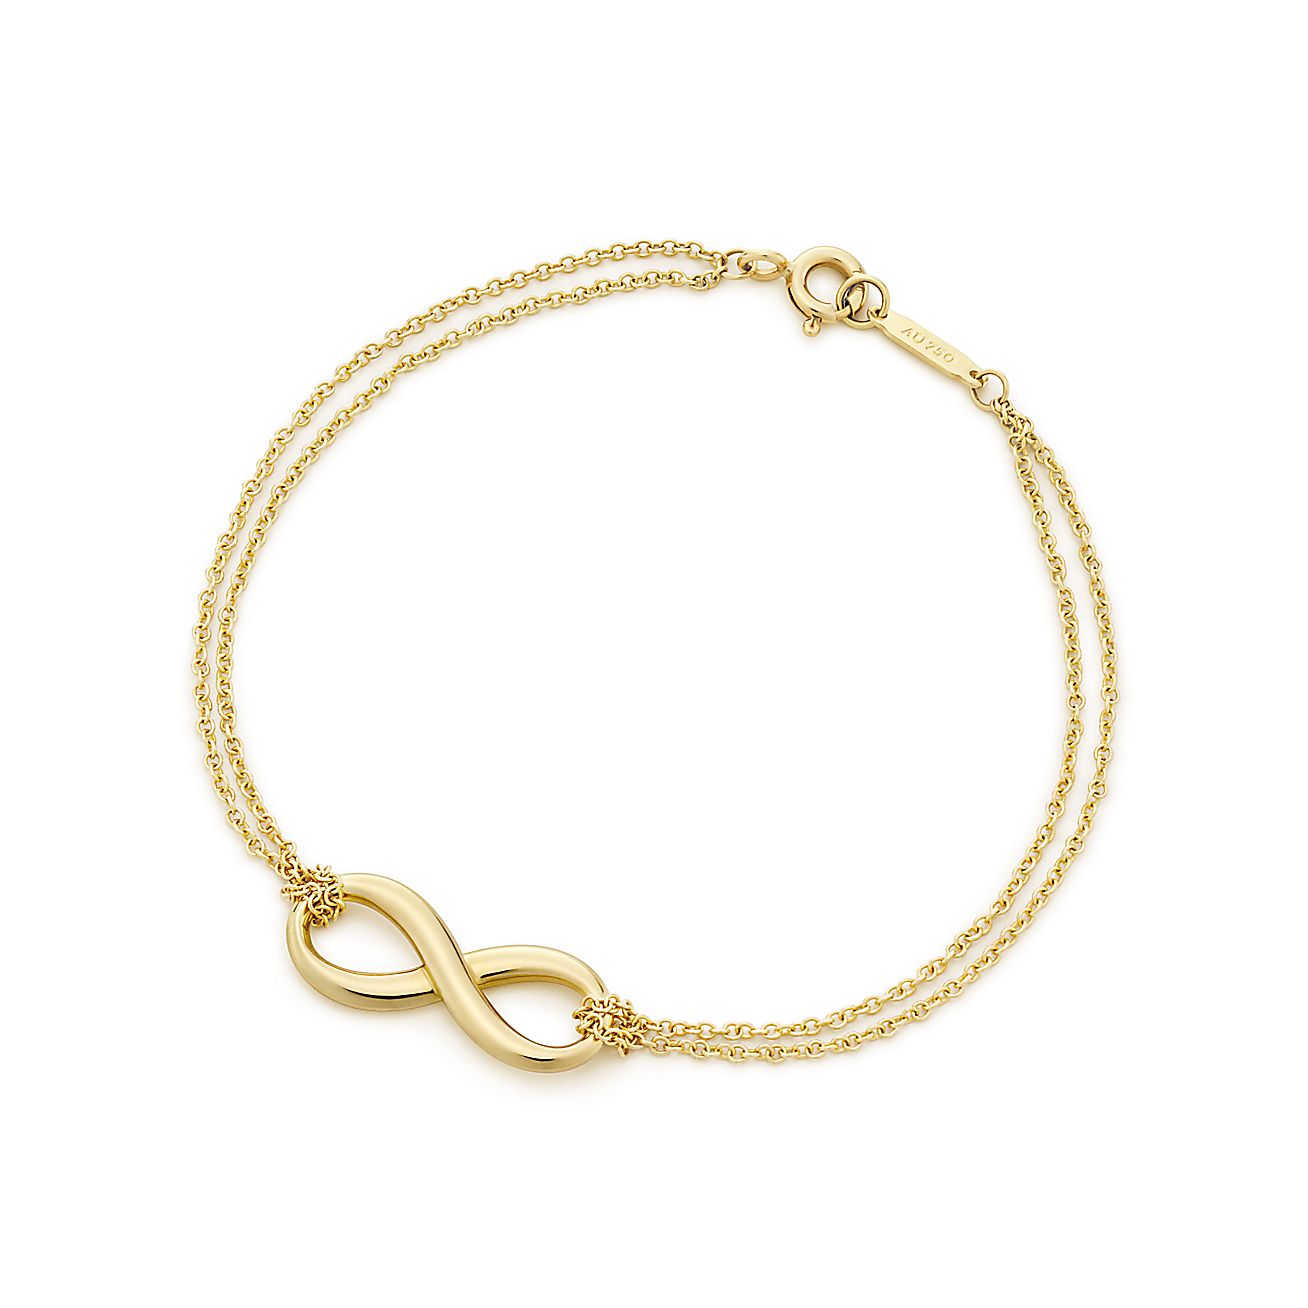 Tiffany Infinity bracelet in 18k gold, medium. Tiffany & Co.